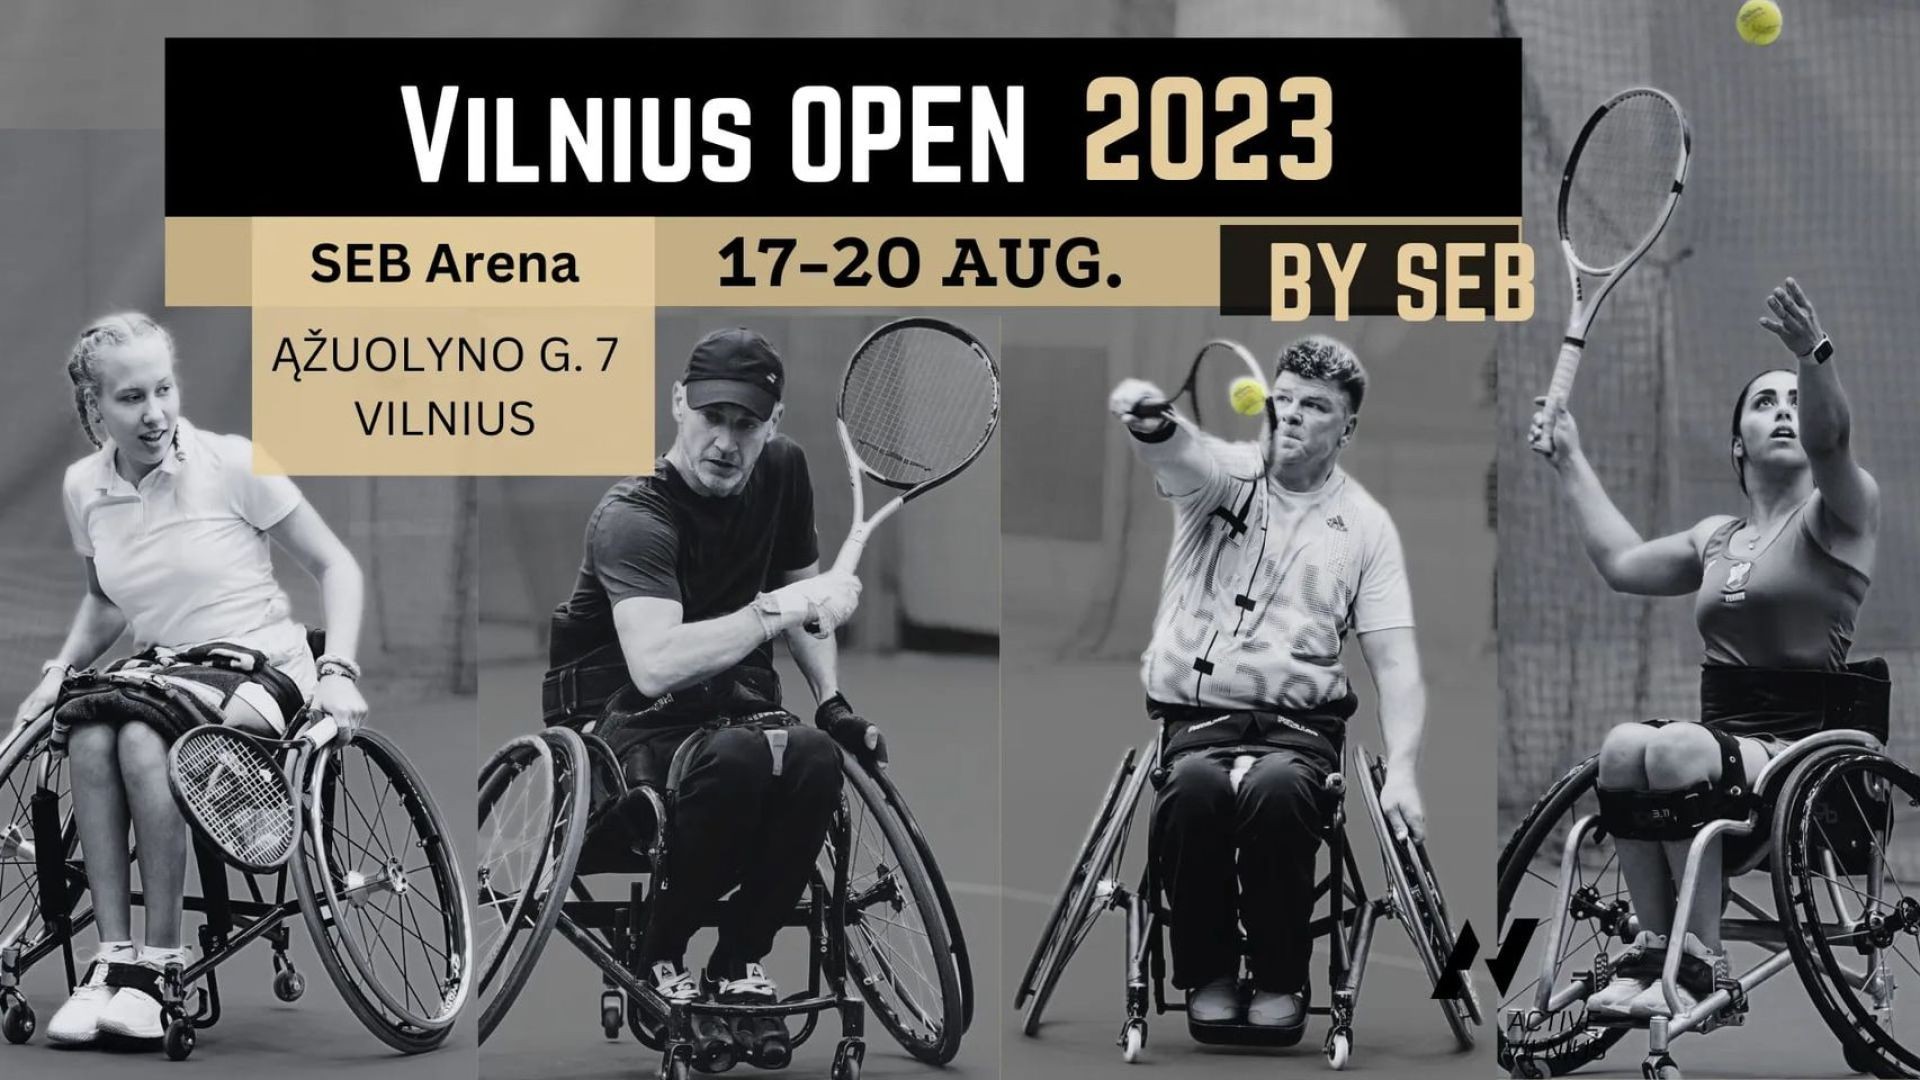 COURT 8 DAY 1 - VILNIIUS OPEN 2023 BY SEB